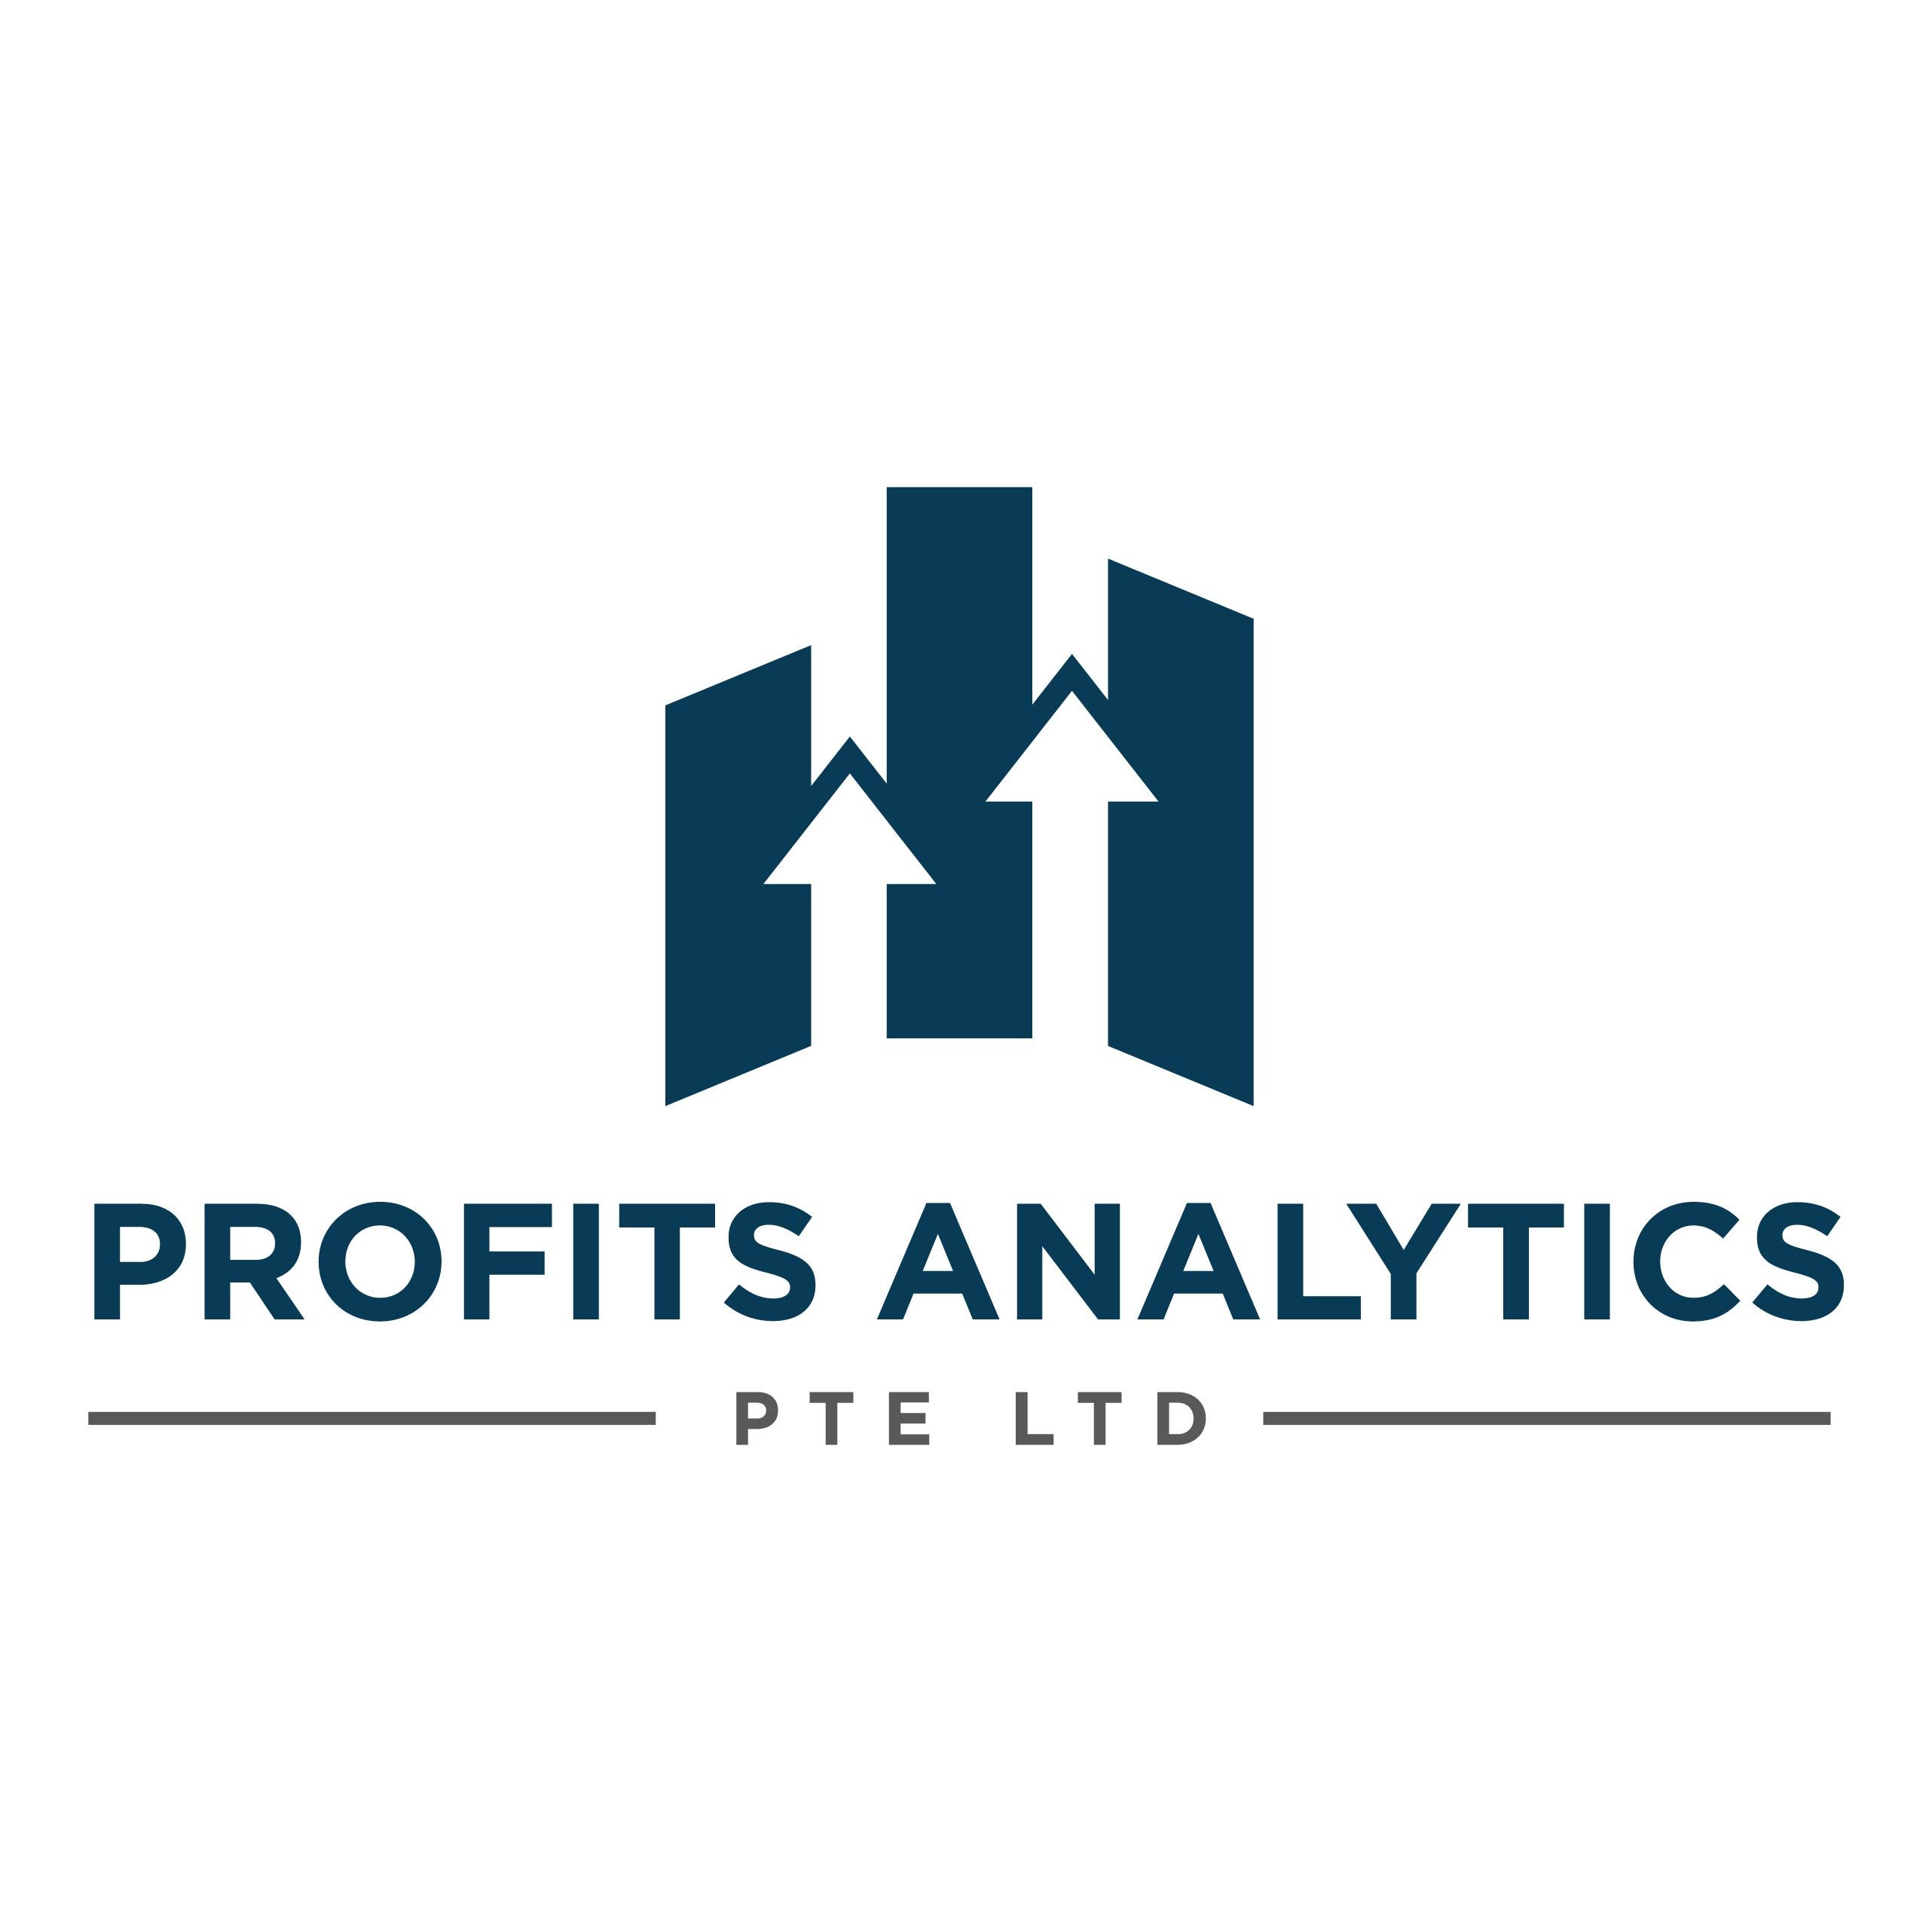 Profits Analytics Pte Ltd